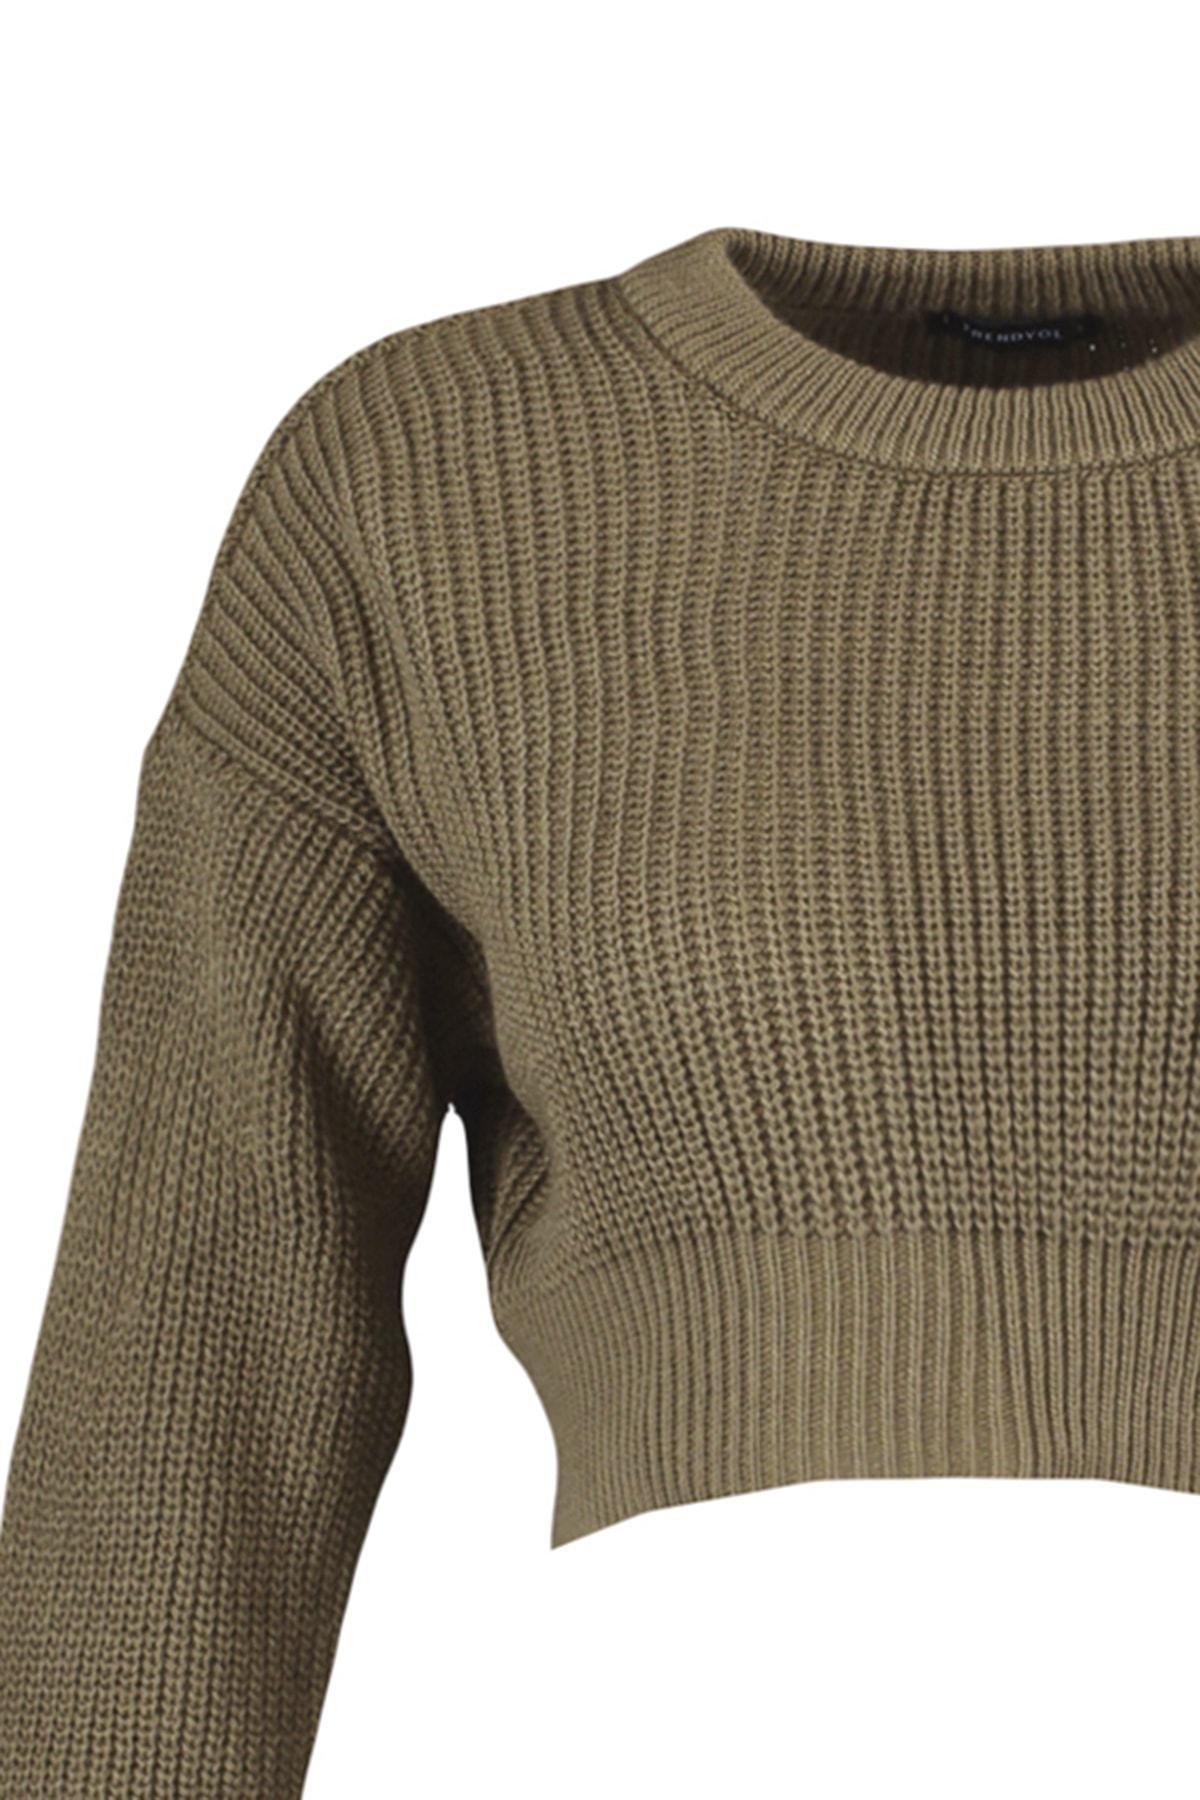 Trendyol - Brown Crew Neck Sweater